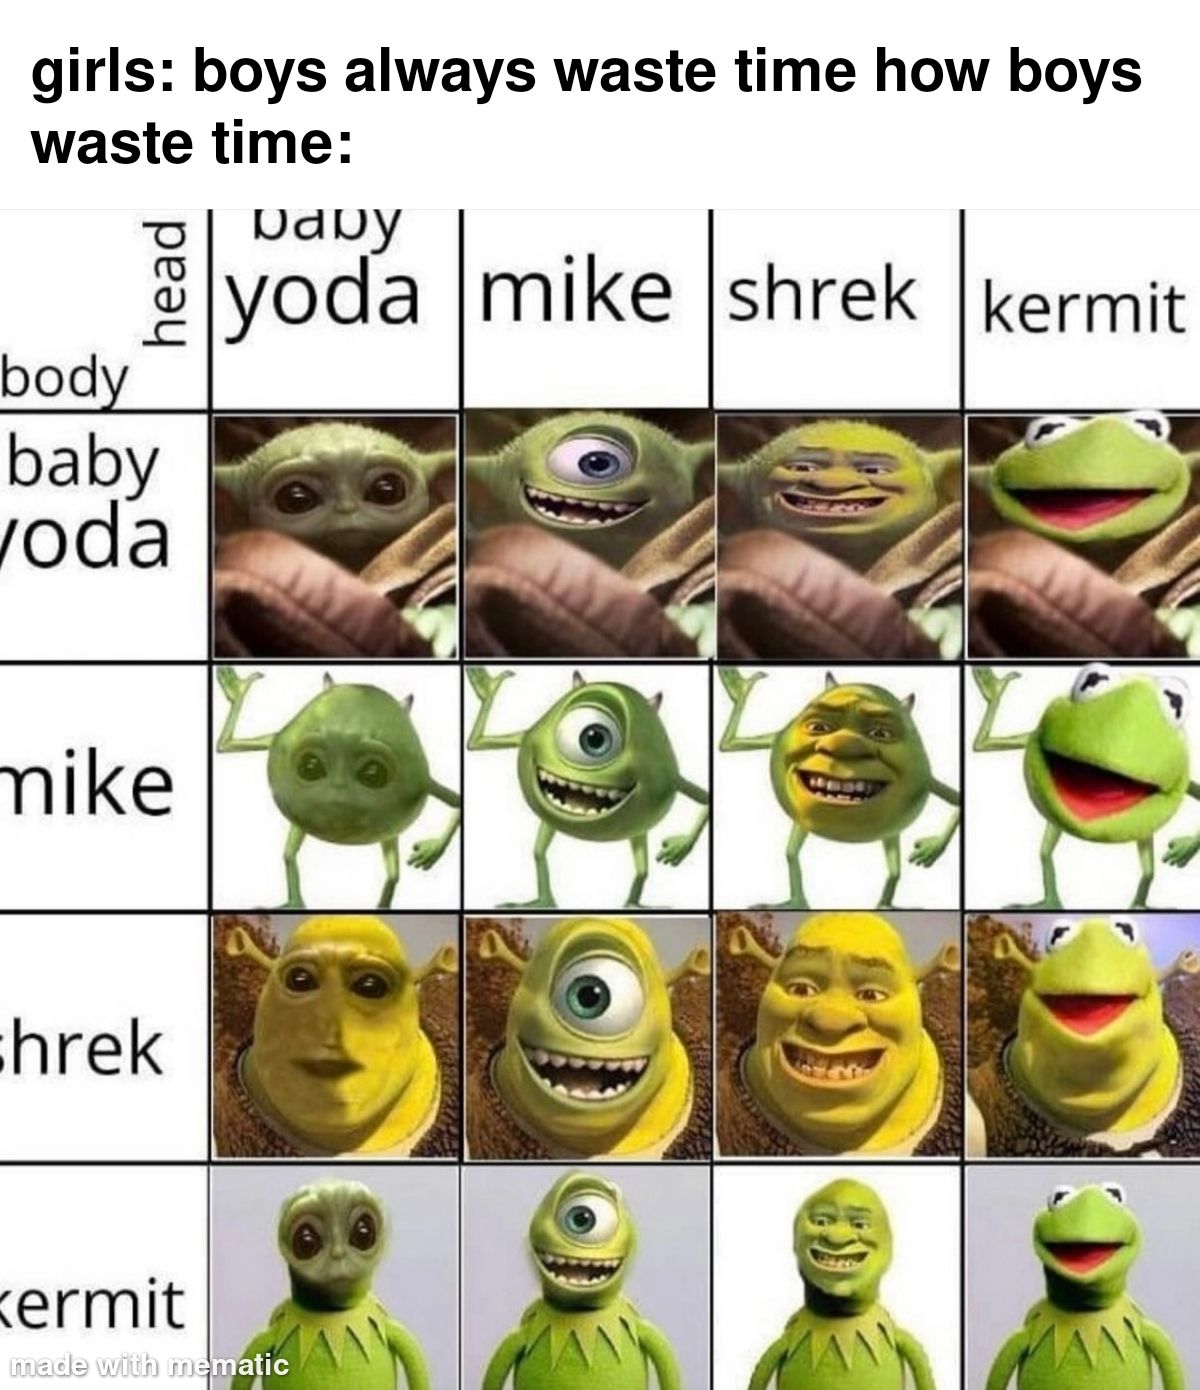 I love the Shrek-Mike